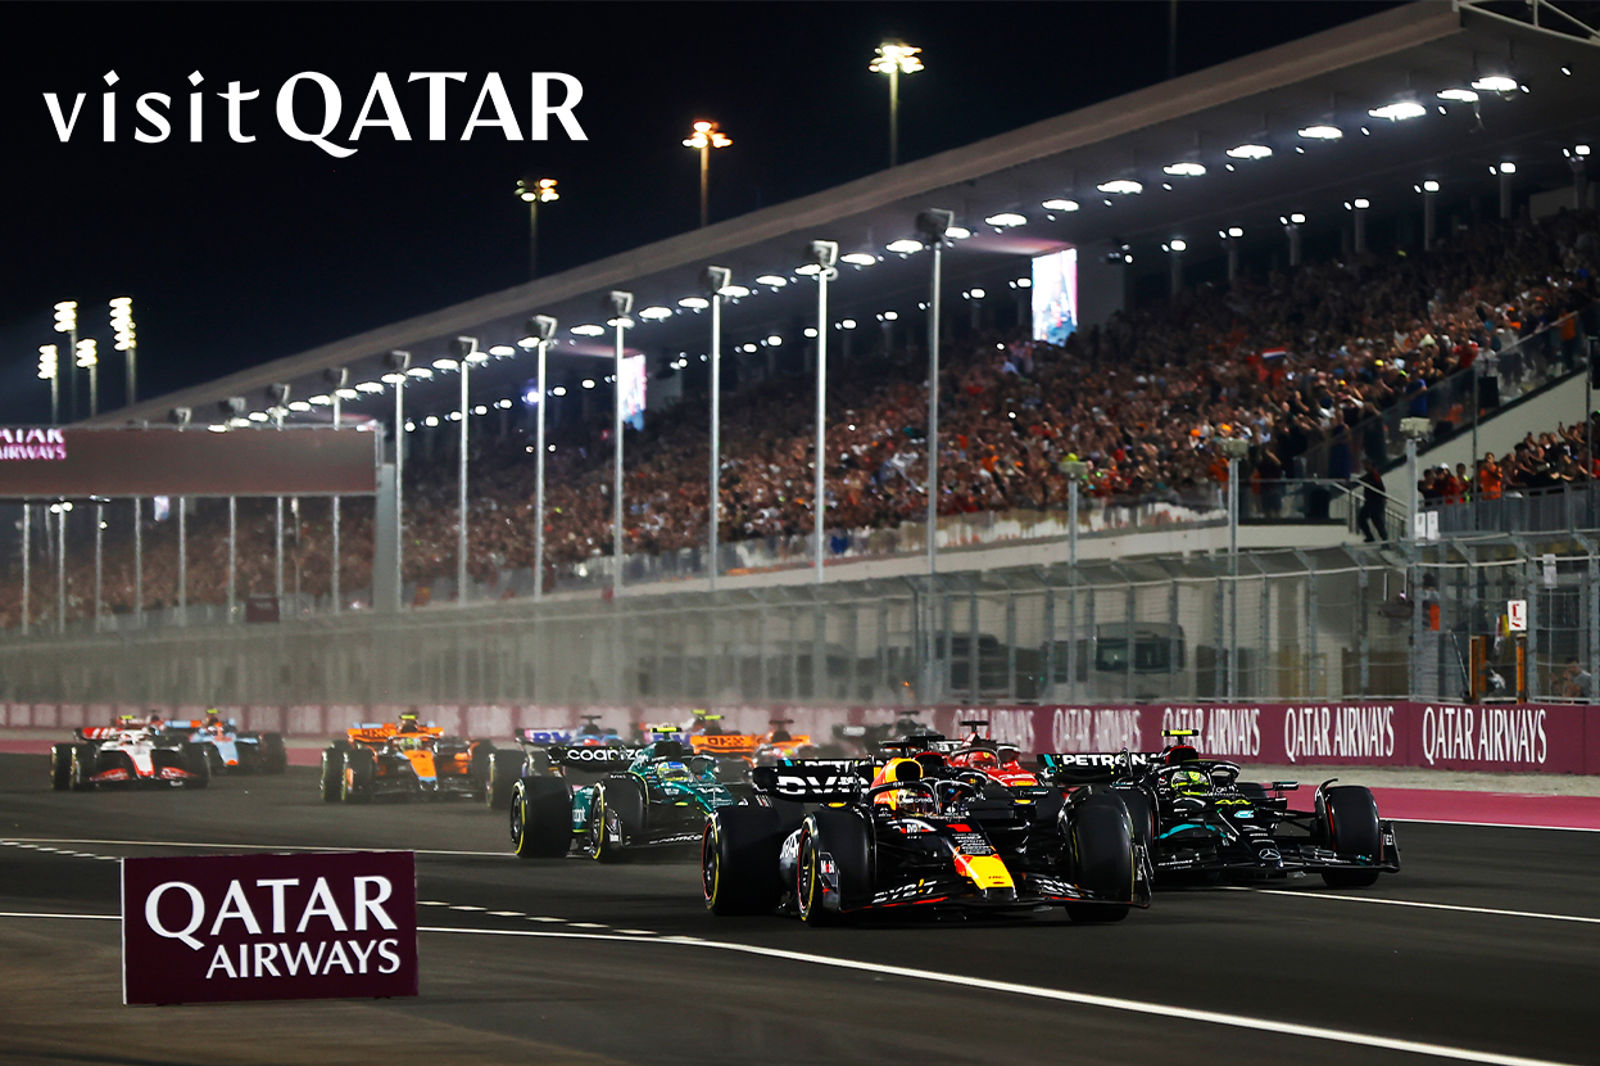 Formule 1 Qatar City Centre Rotana 5*